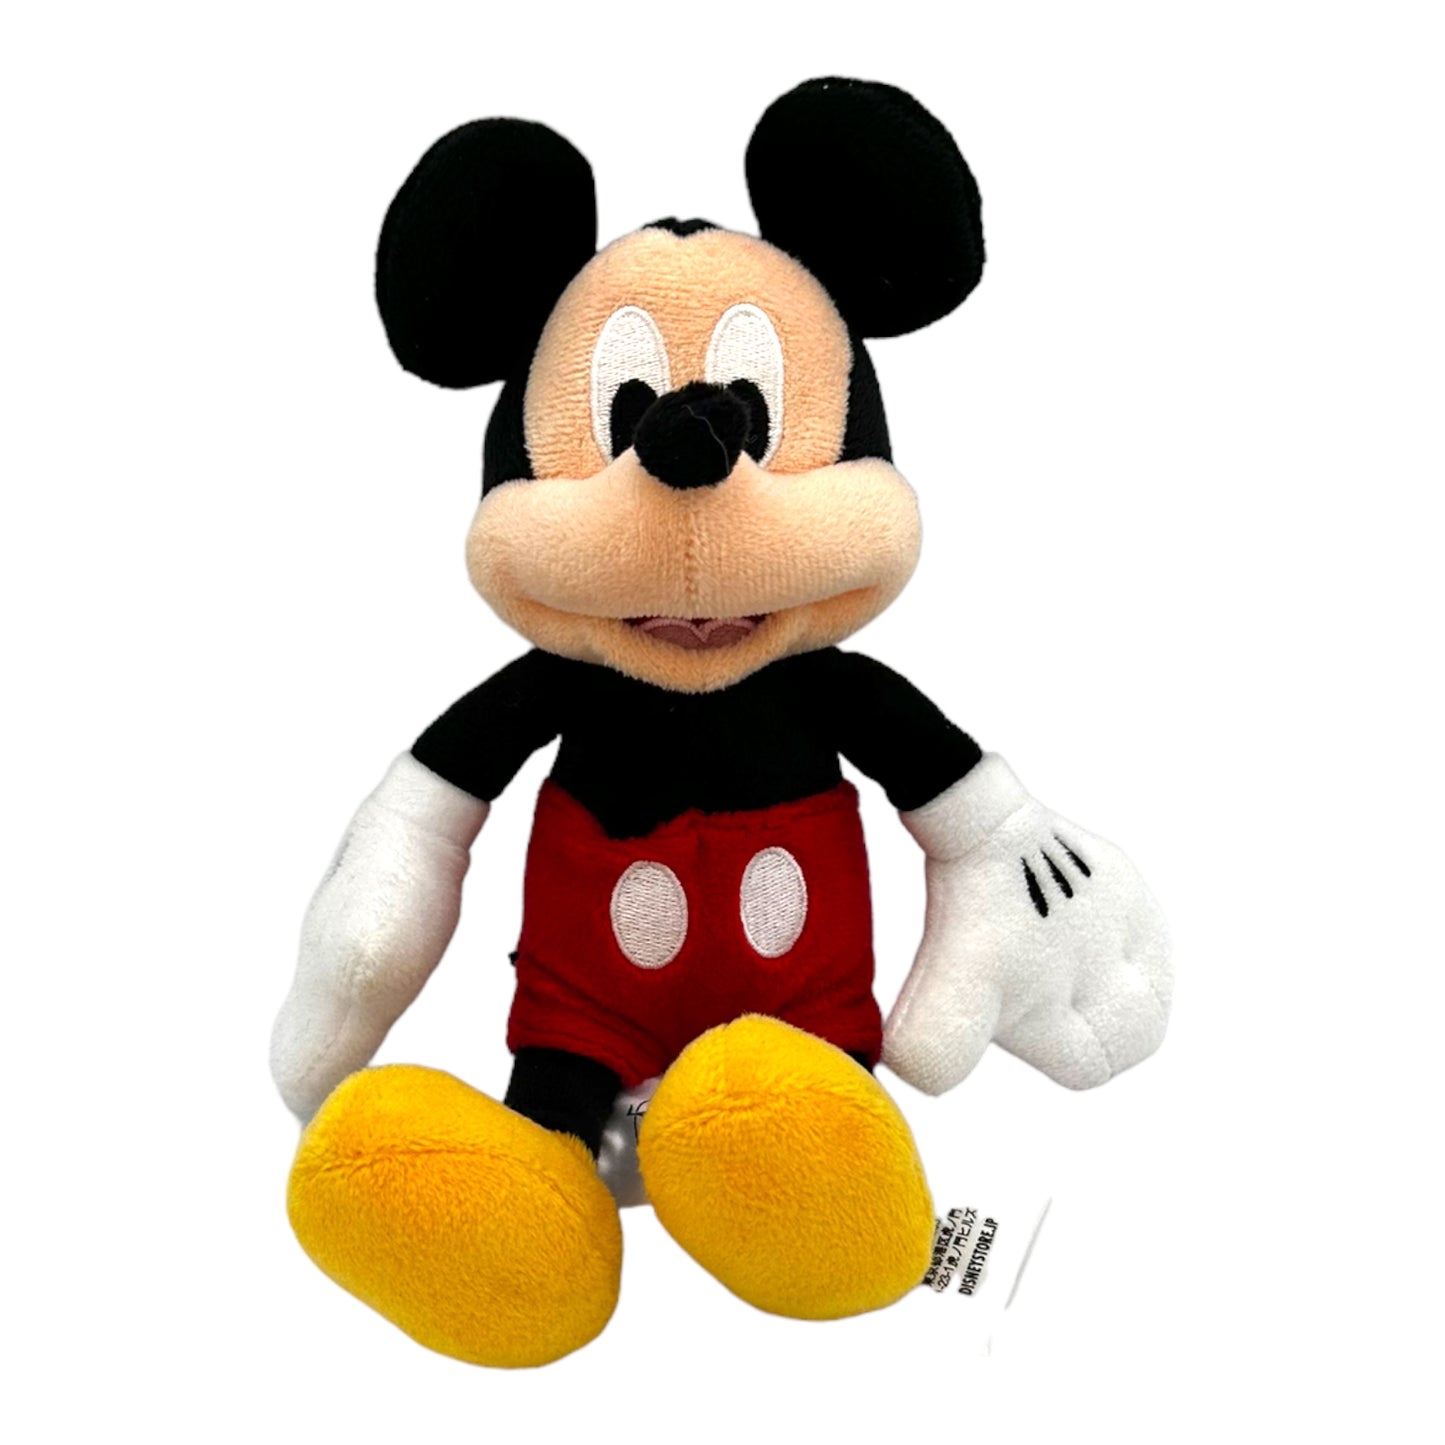 Mickey Mouse Child Plush Toy - Vintage